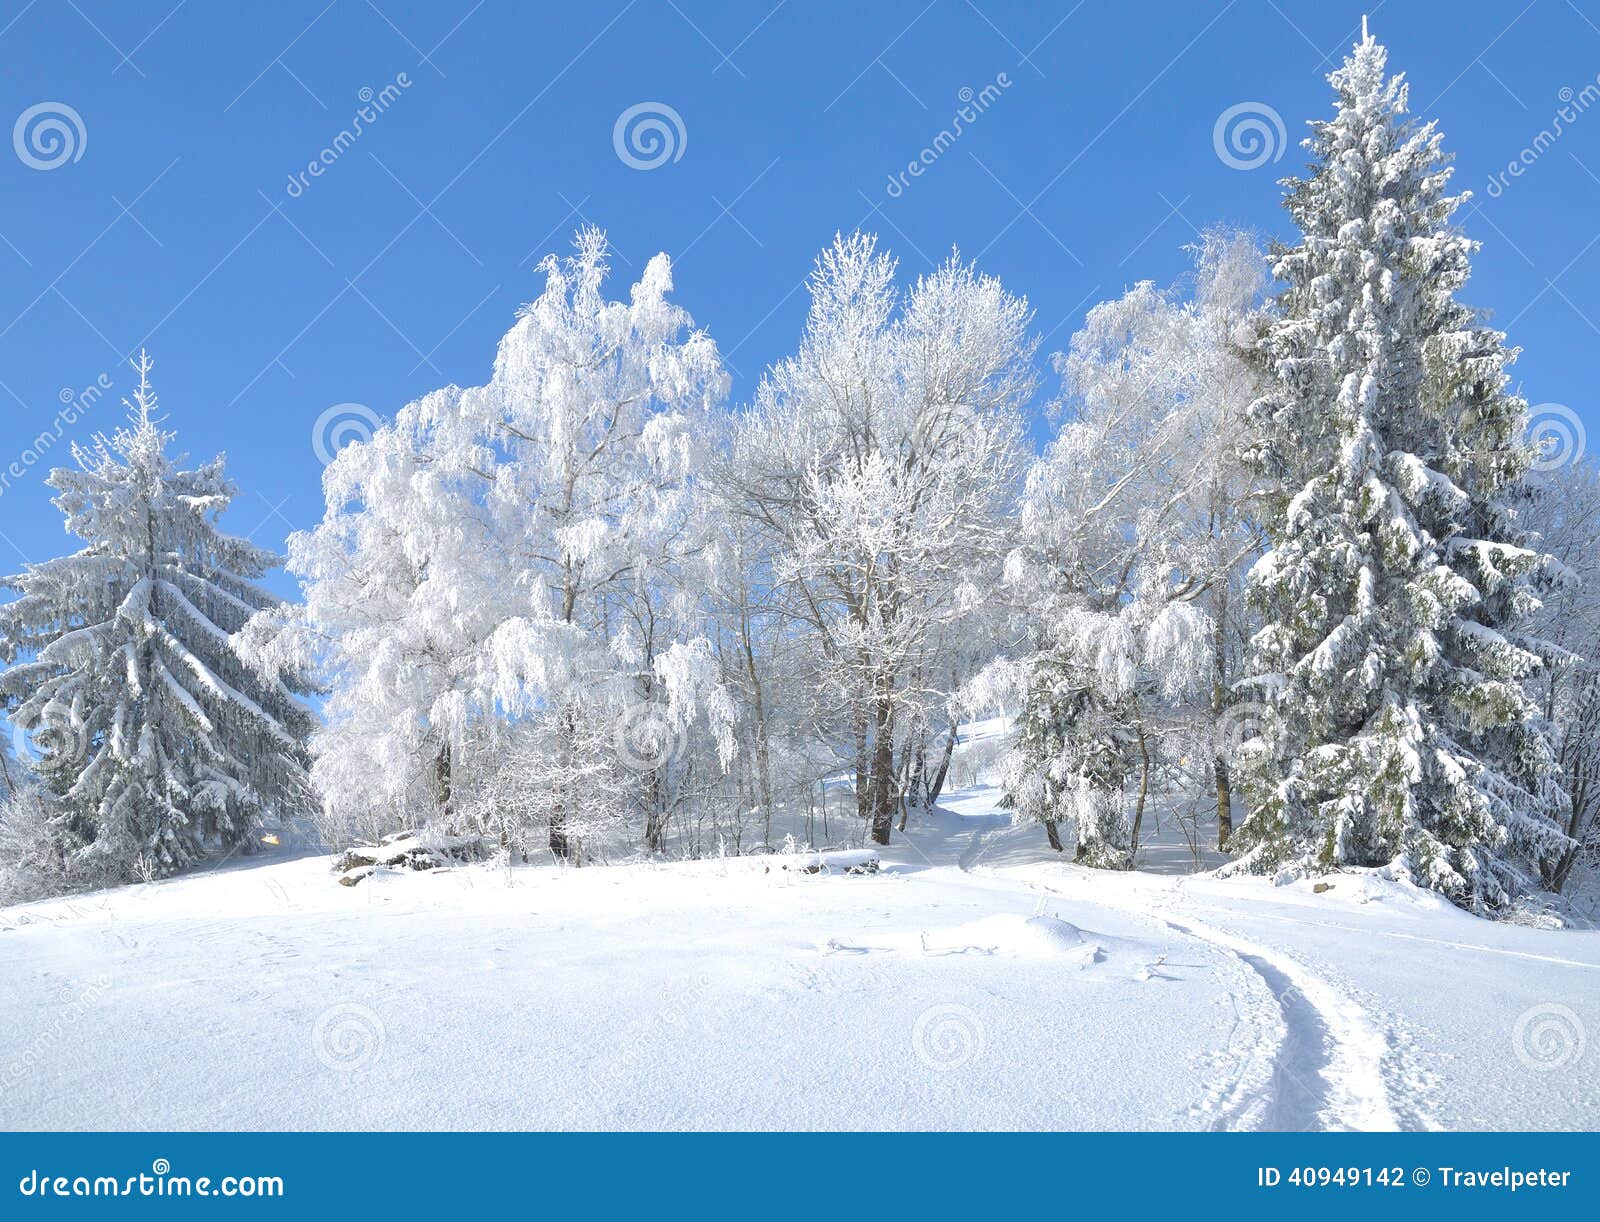 wintertime in bavarian forest,bavaria,germany